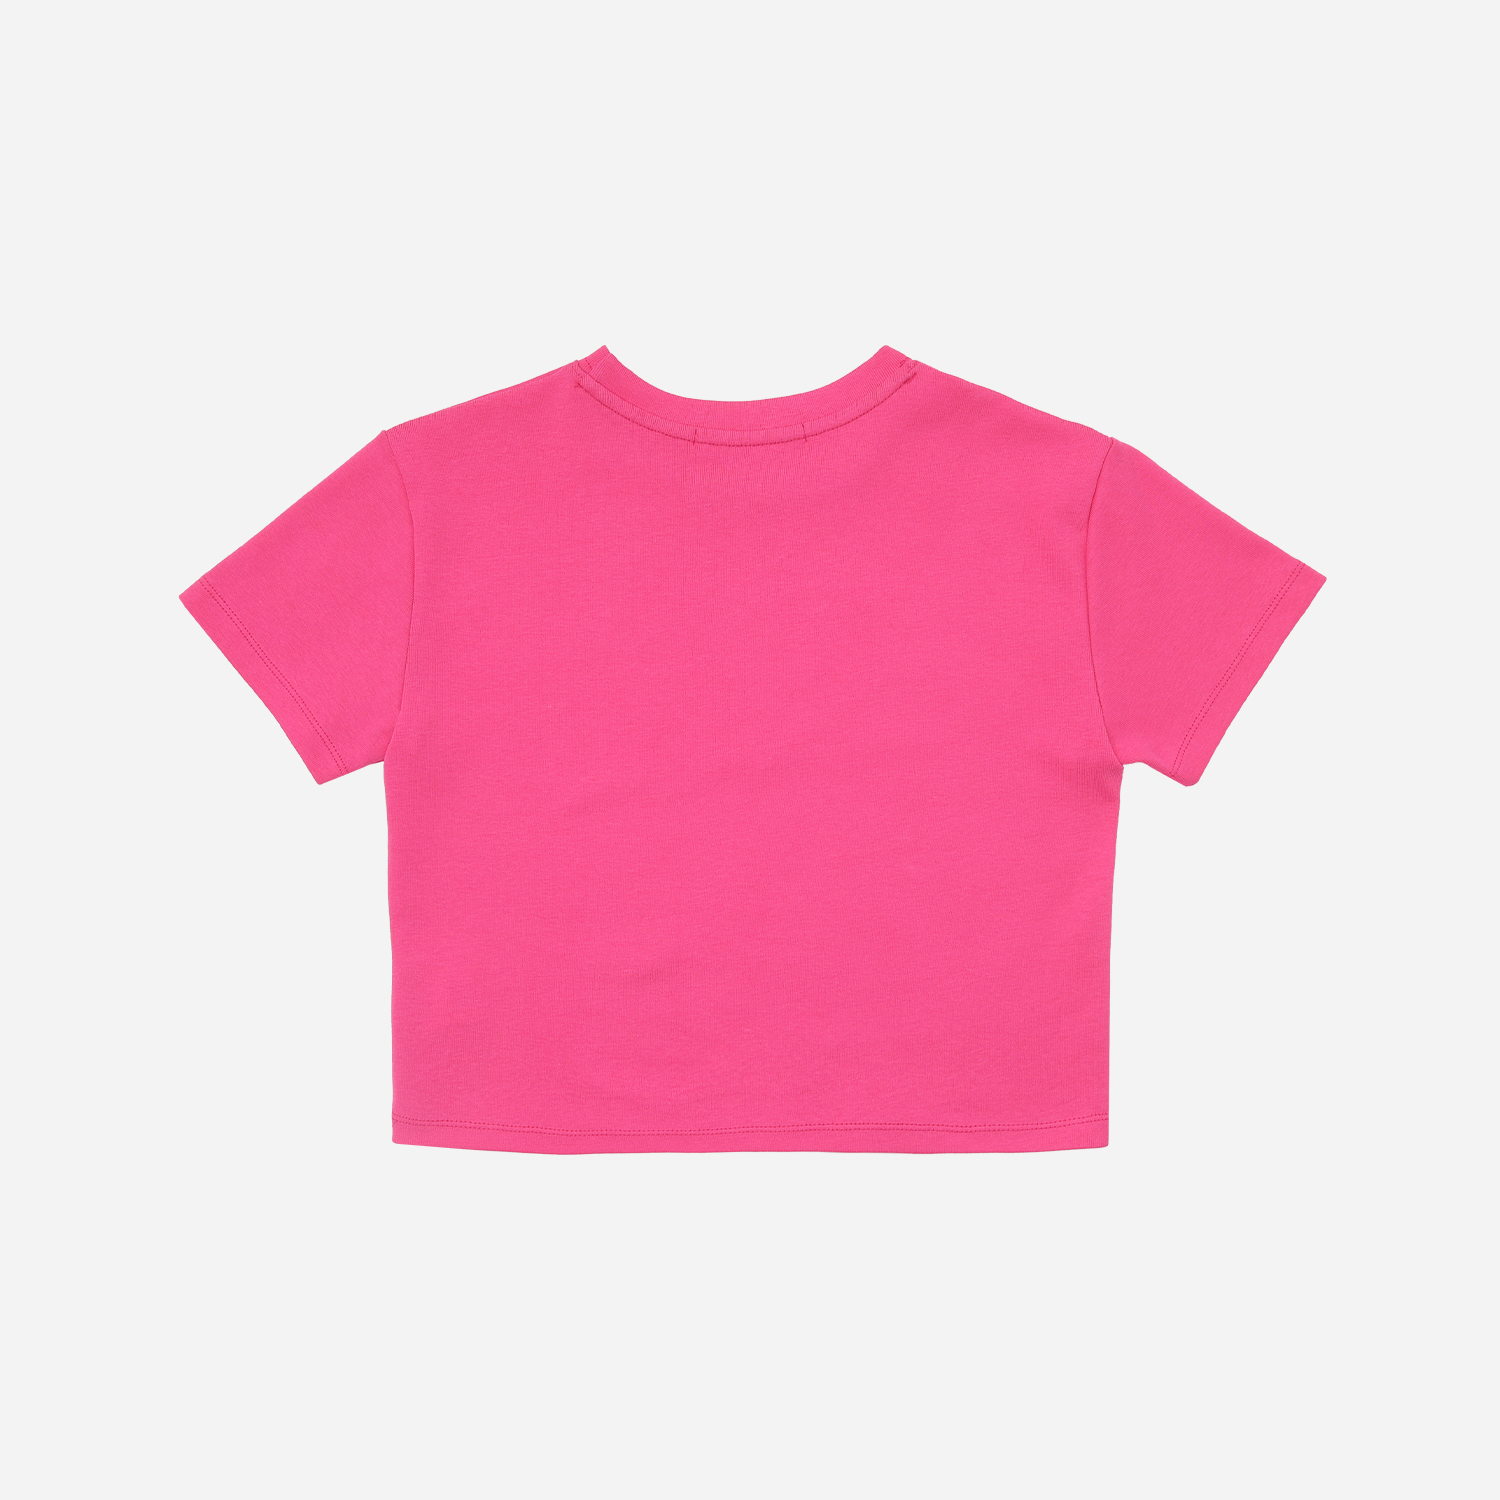 SAC 로고 크롭 티셔츠 핑크 4W2311001